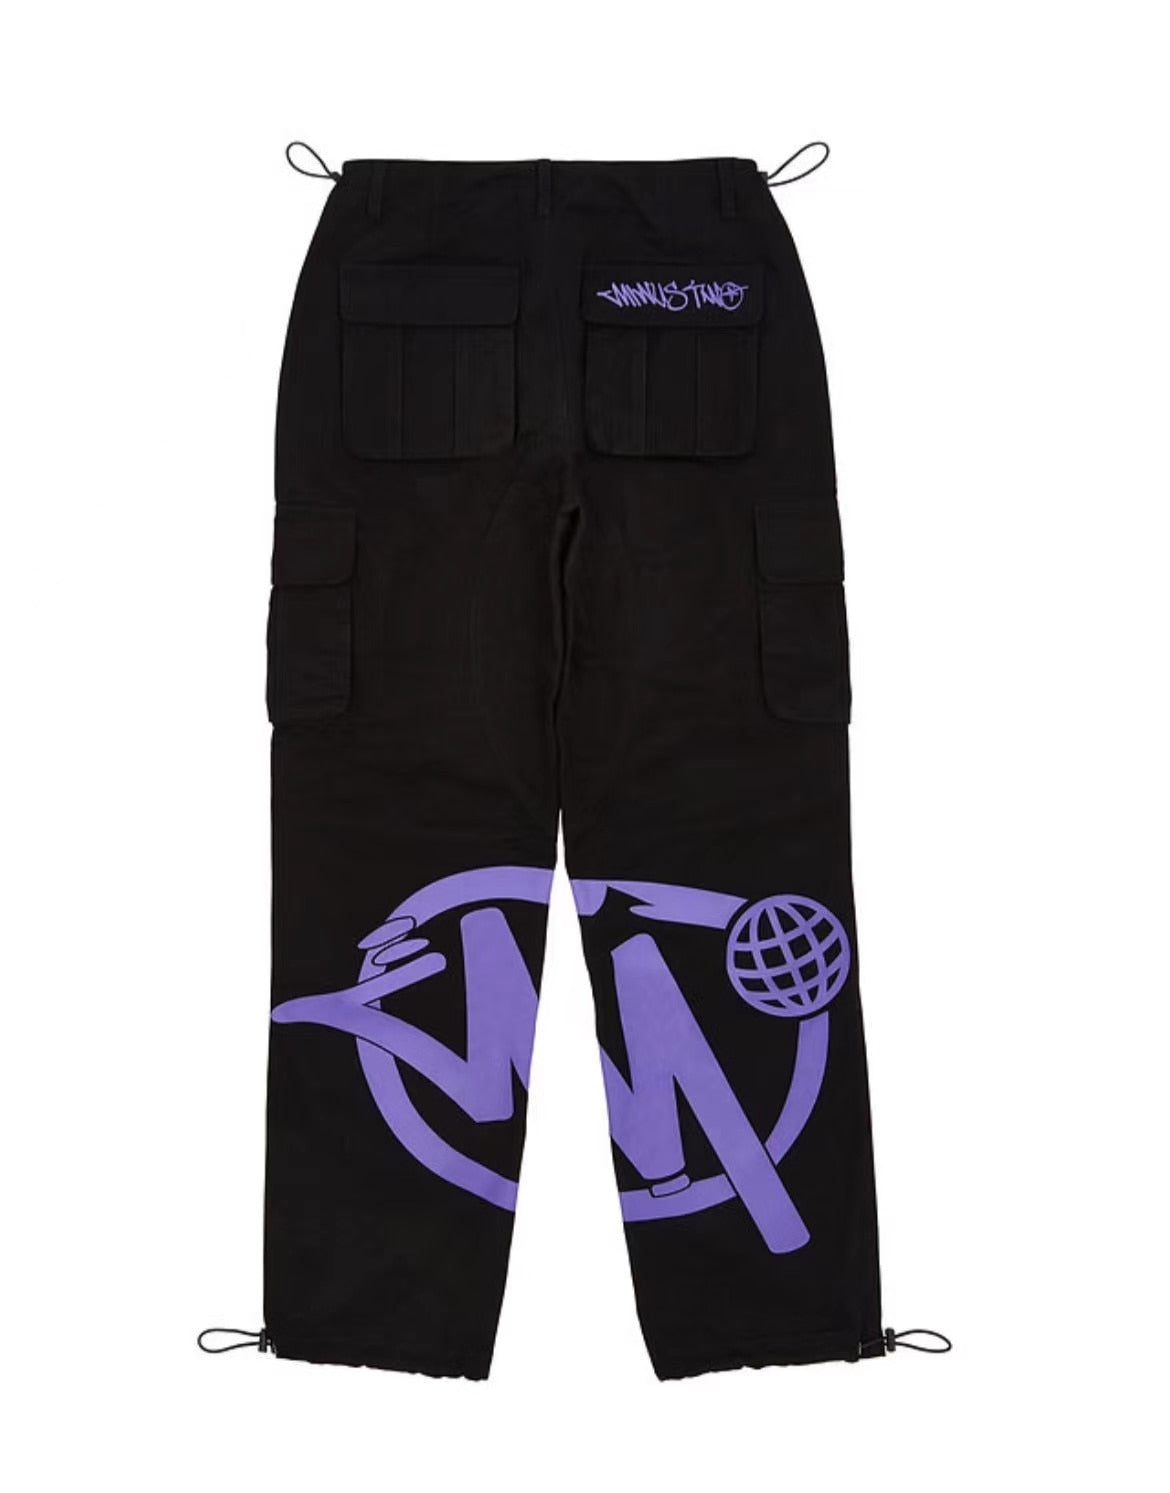 Y2K style cargo pants